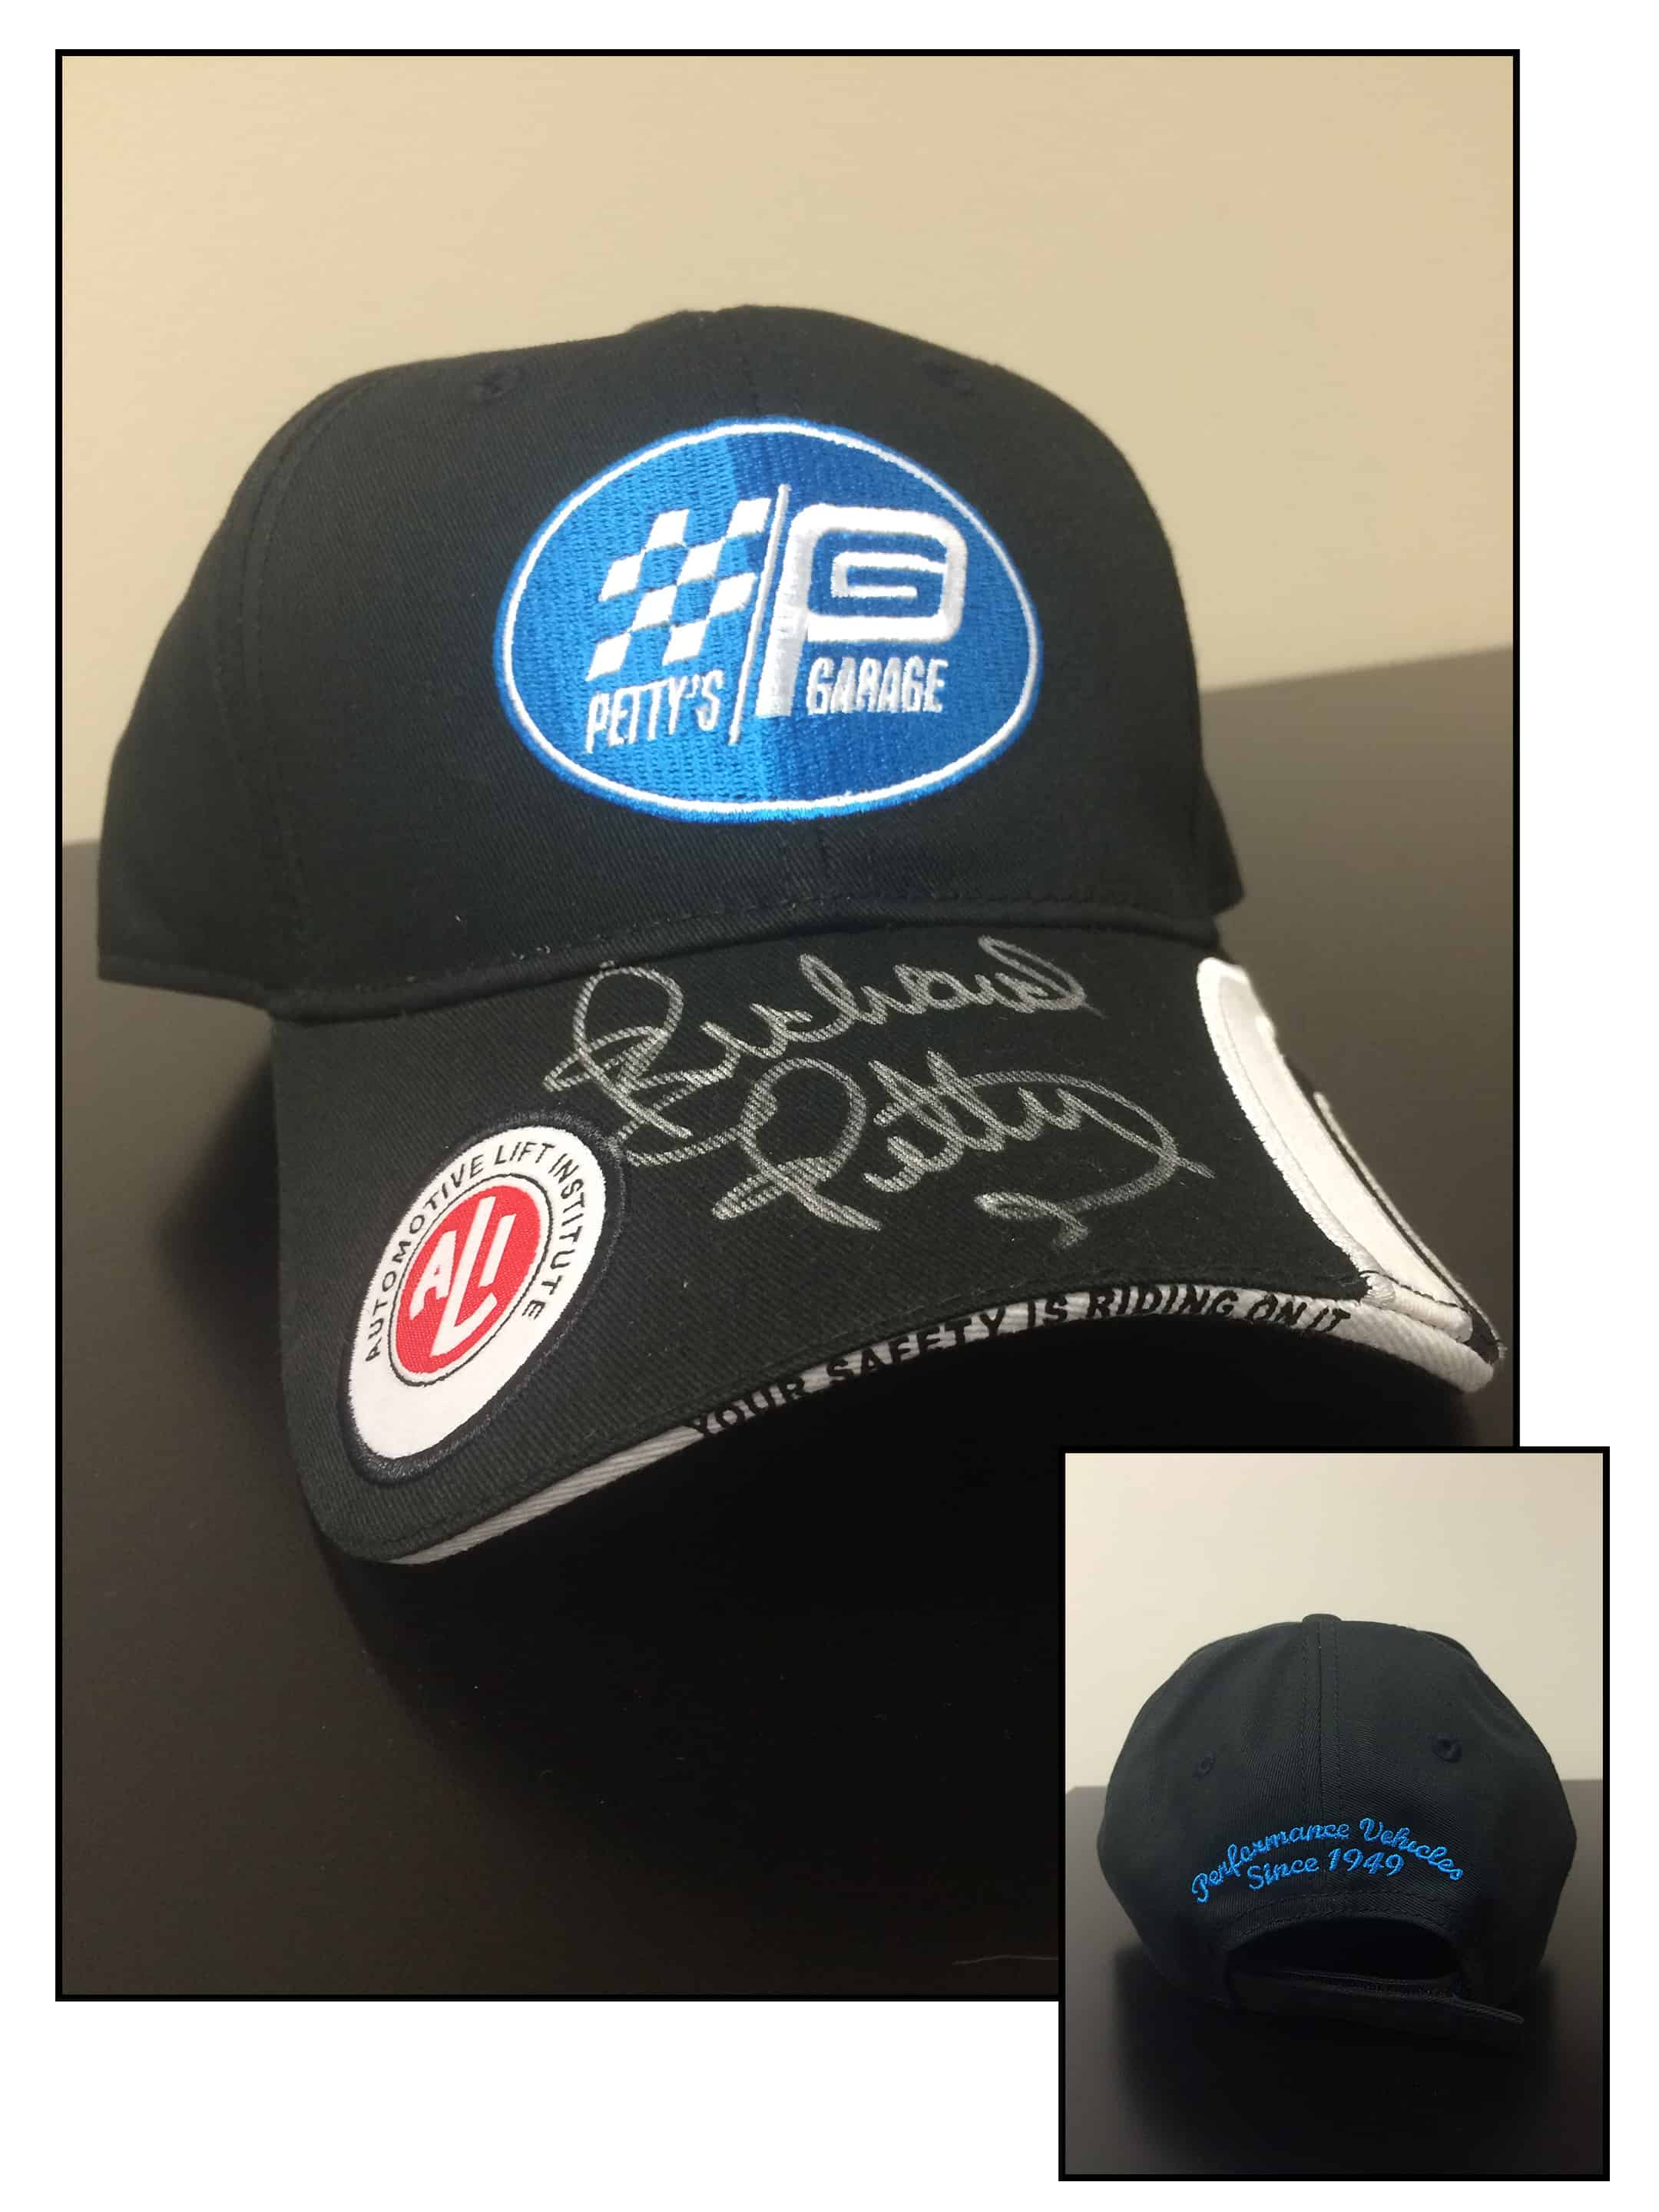 Richard Petty Signed Automotive Lift Institute /Petty’s Garage Ball Cap Image